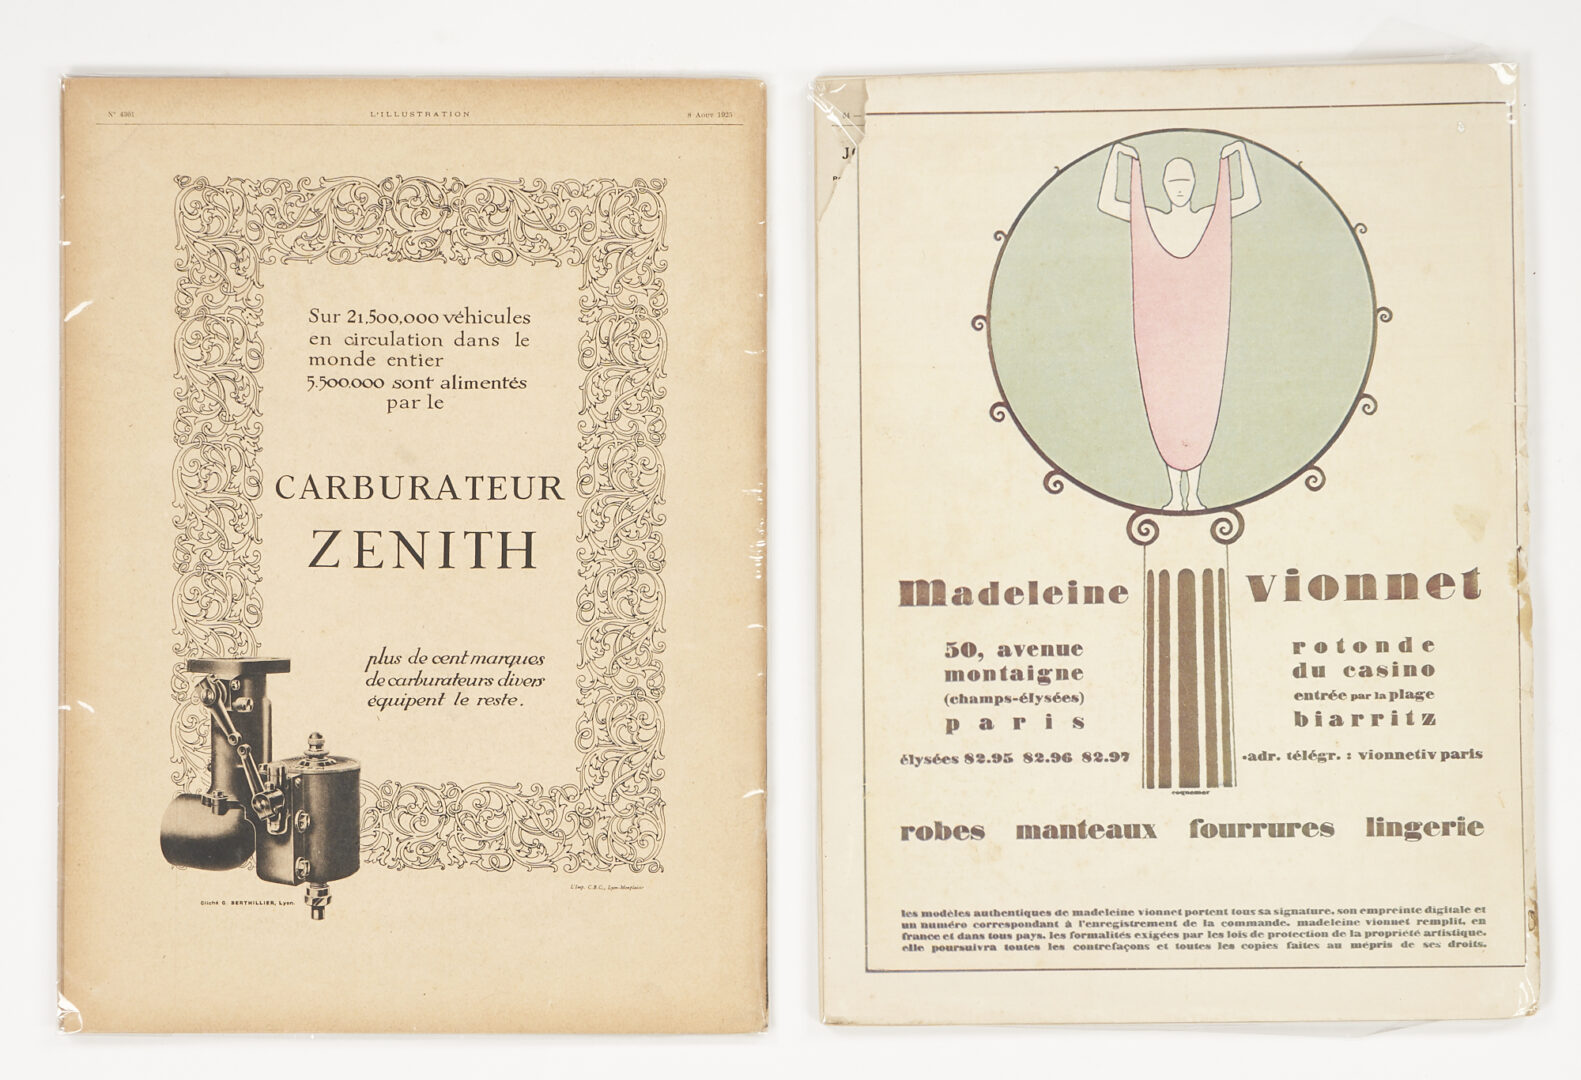 Lot 184: 6 pcs. 1925 Paris Exposition Ephemera, incl. Magazines